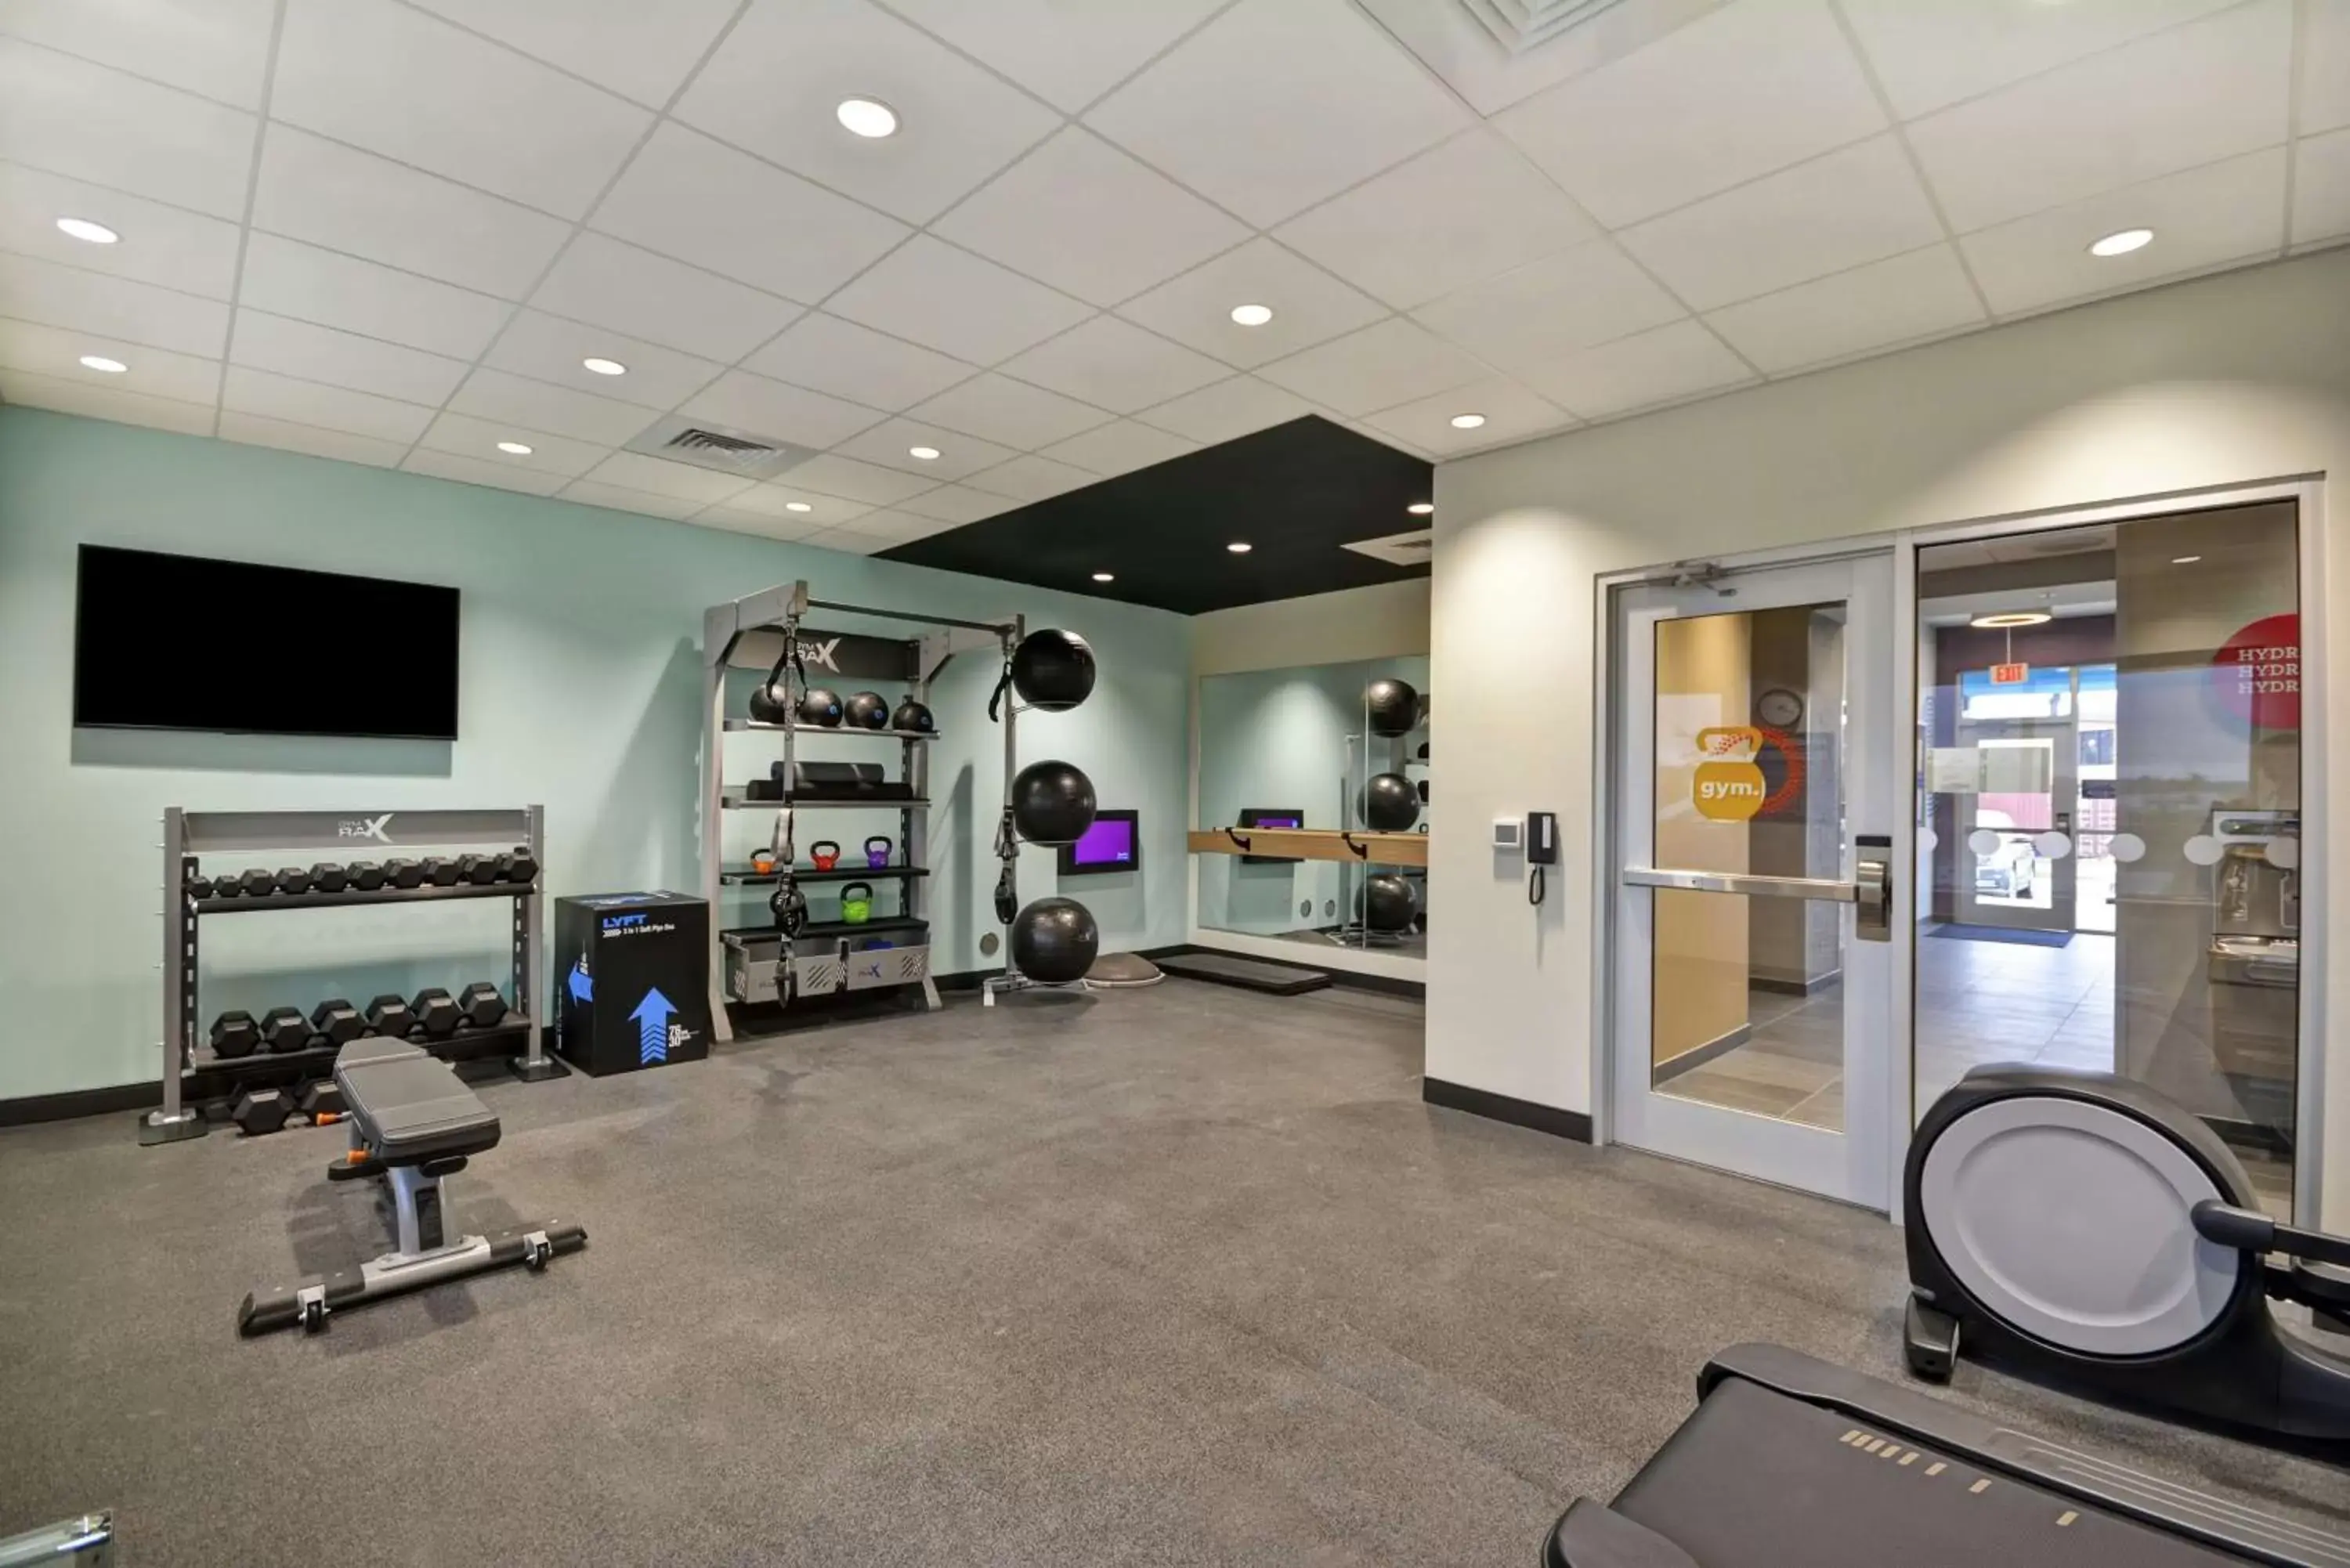 Fitness centre/facilities, Fitness Center/Facilities in Tru By Hilton Winchester, Va